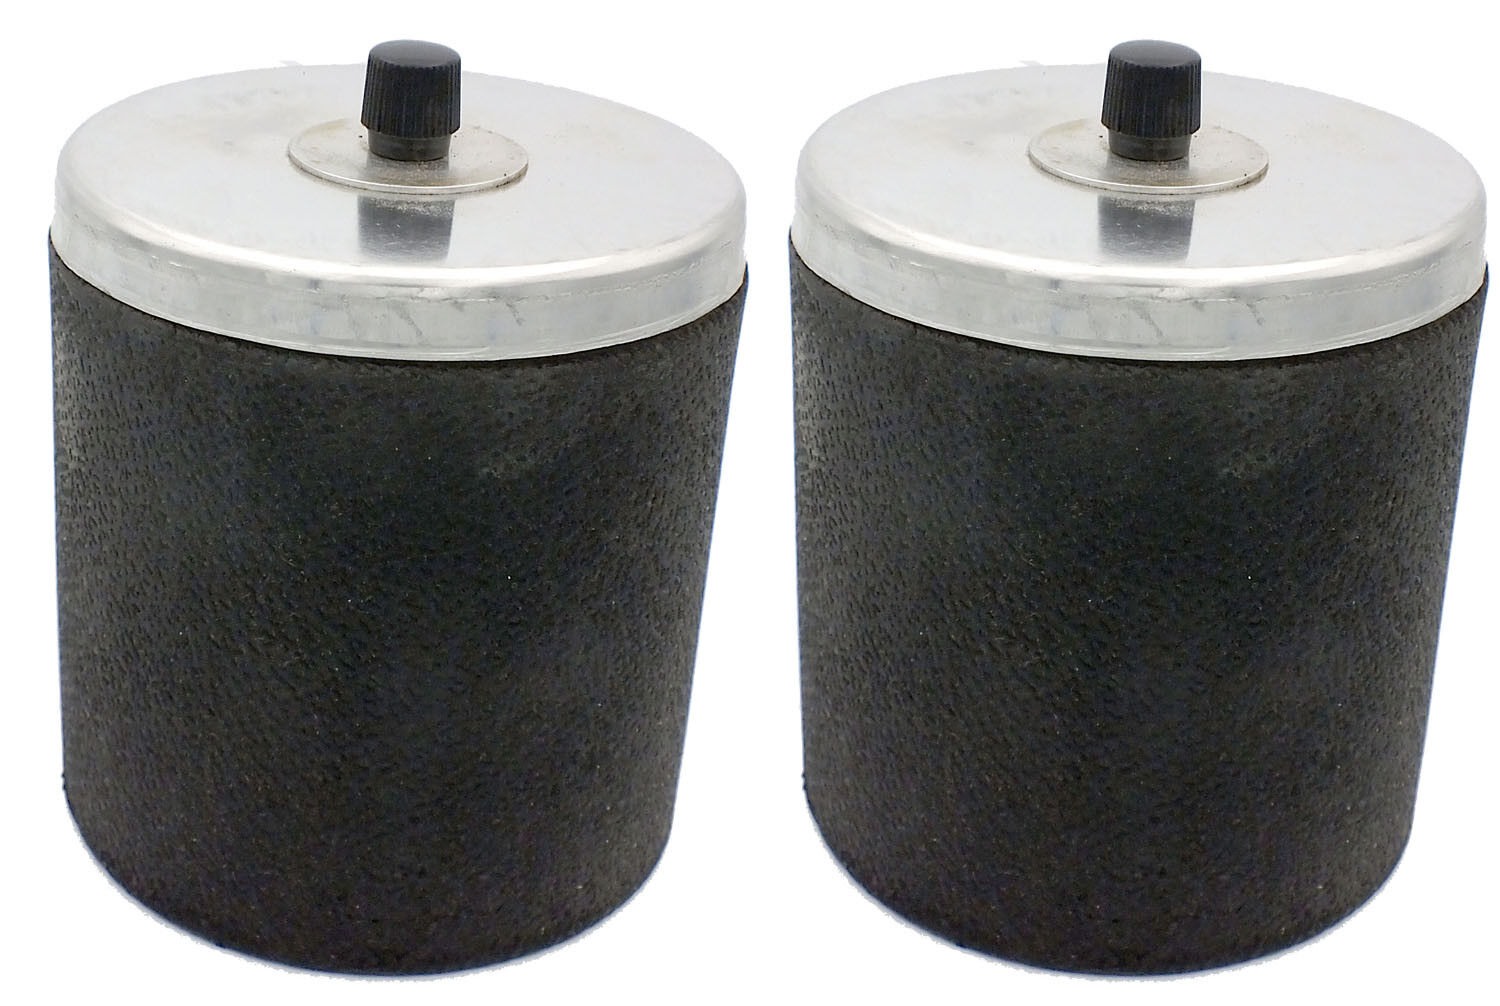 3 lb Drum Rotary Rock Tumbler - Lot of 2 Replacement Barrels - NEW  Без бренда